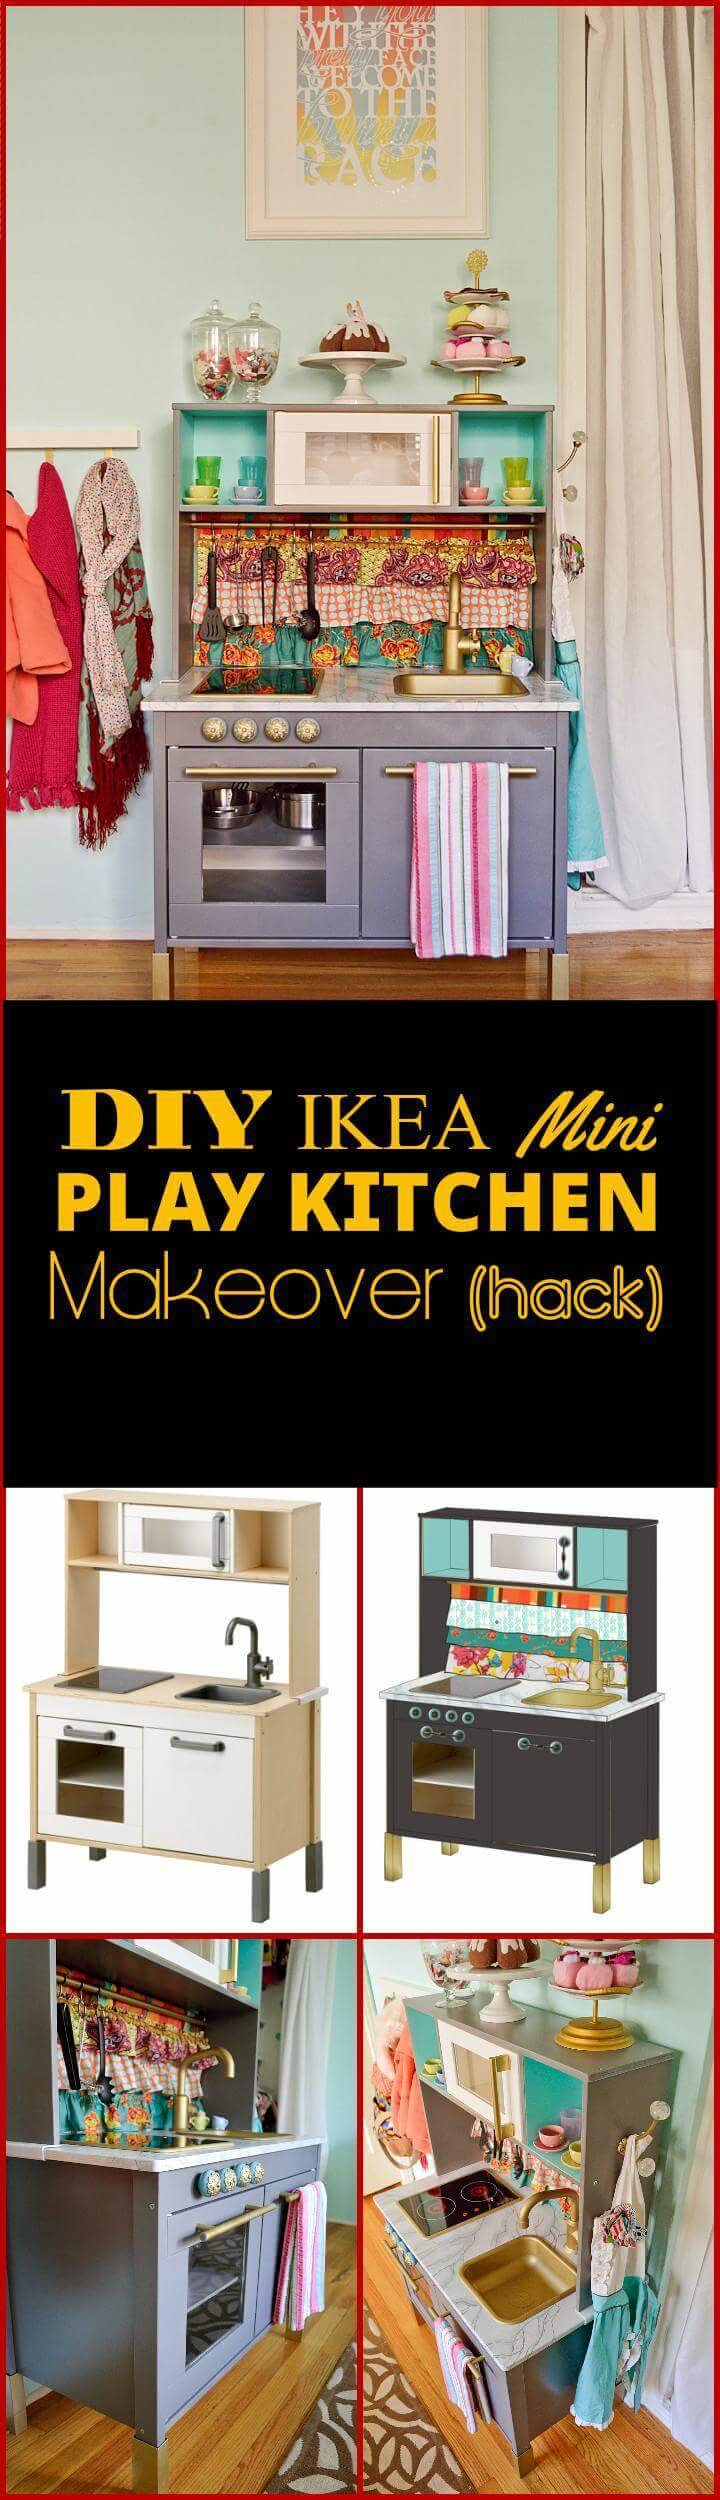 DIY ikea hack mini play kitchen